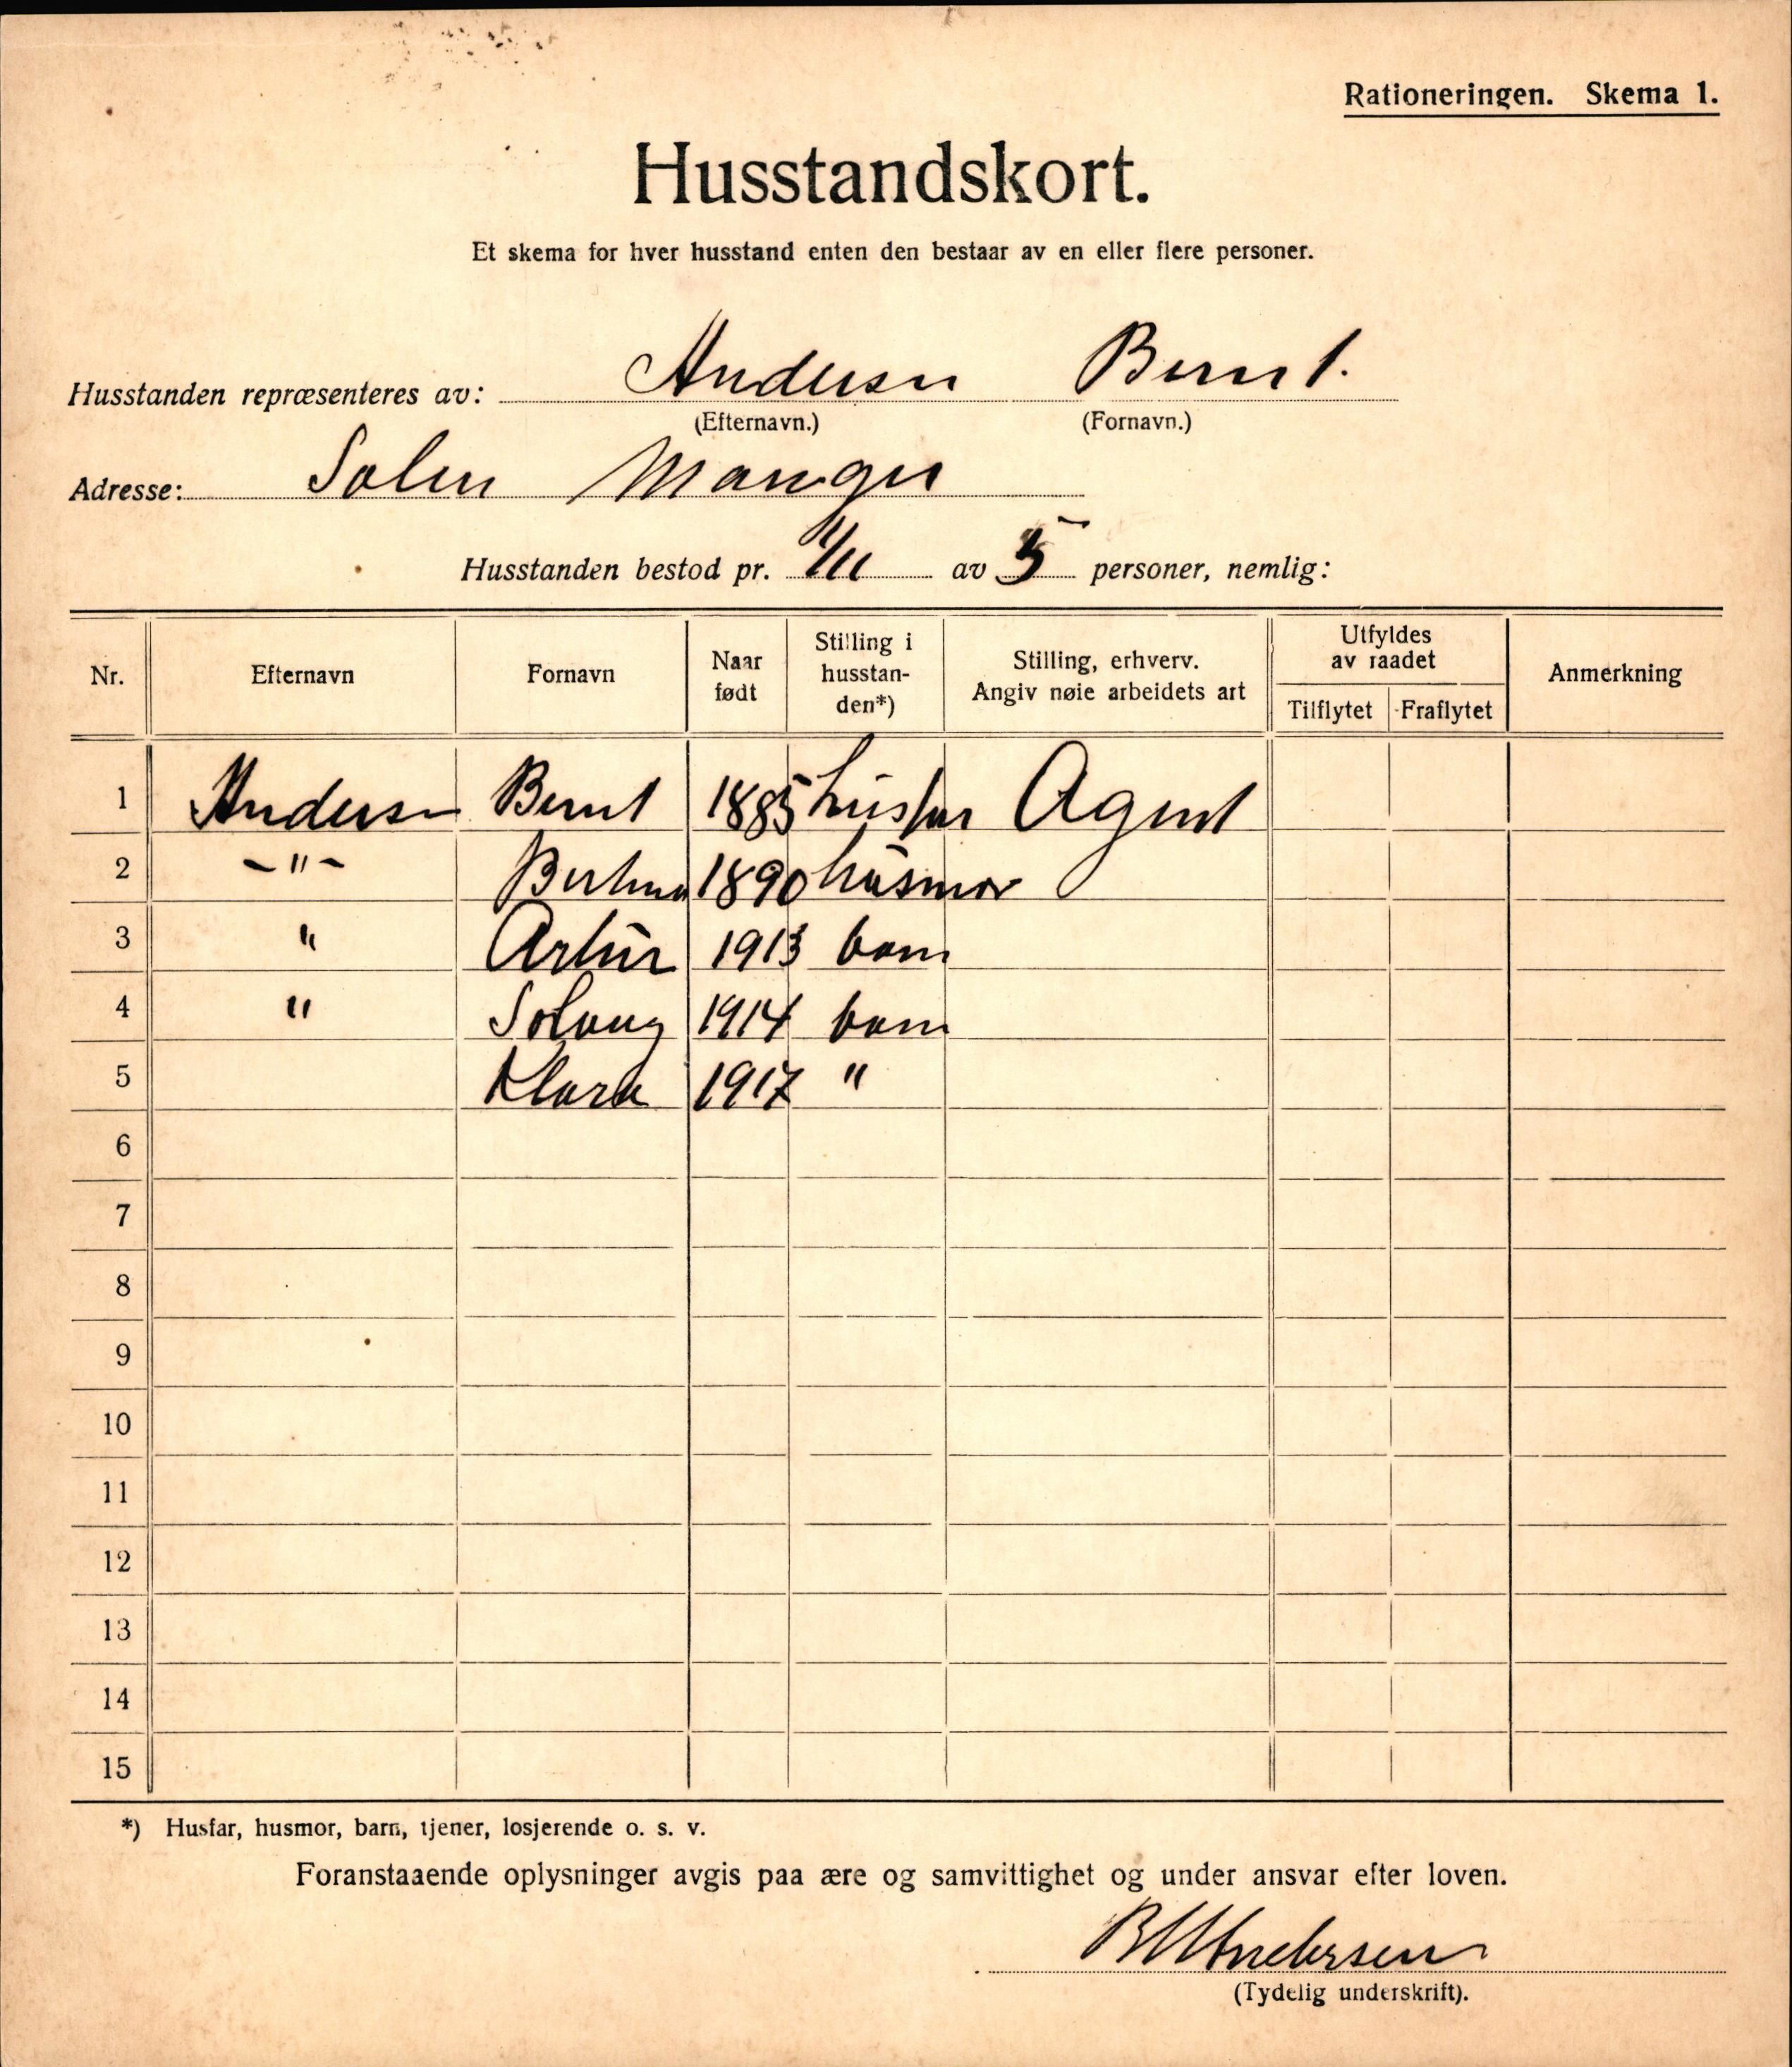 IKAH, Manger kommune, Provianteringsrådet, Husstander per 01.11.1917, 1917, s. 1